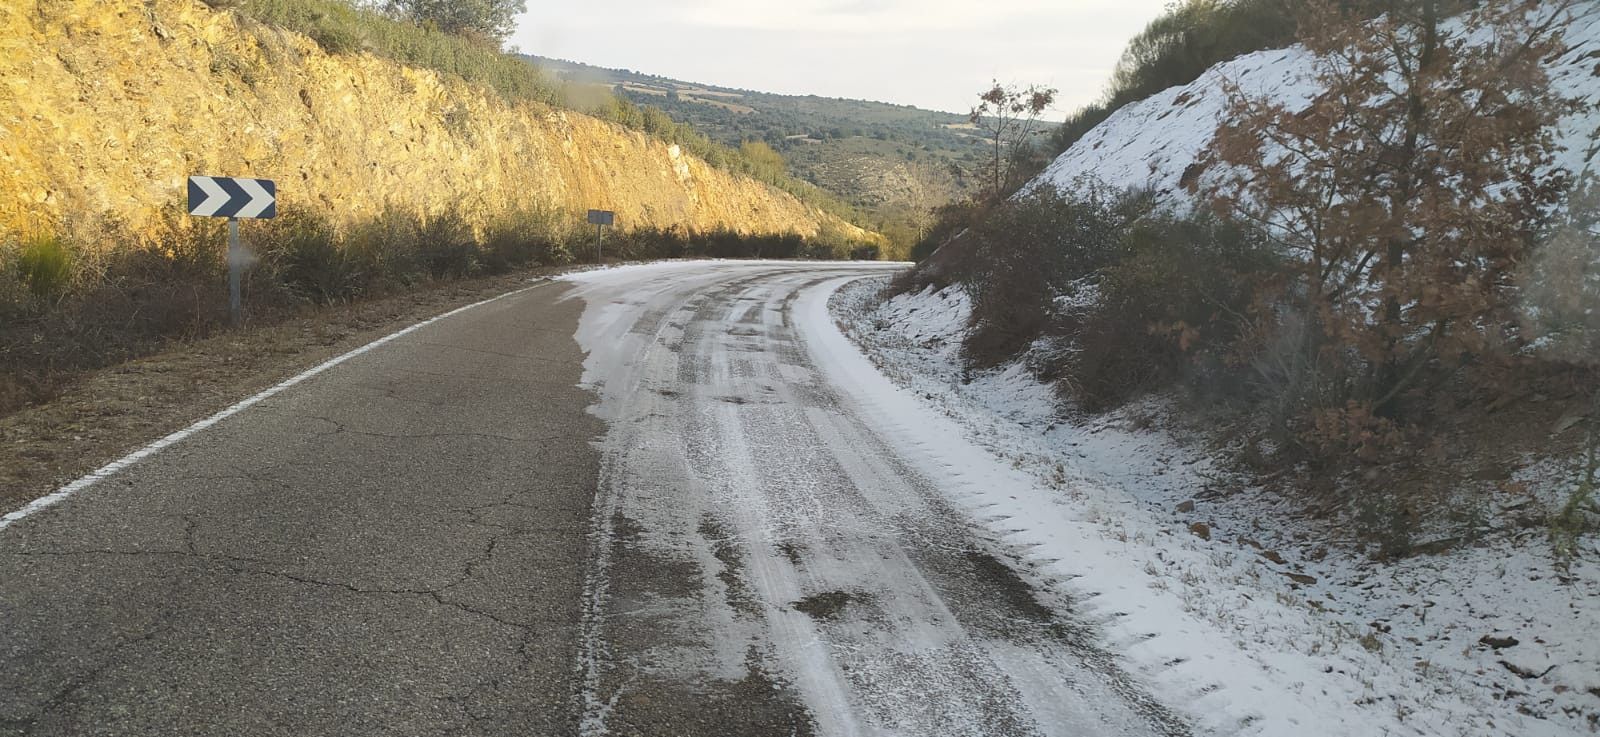 Nieve hielo carretera (1)